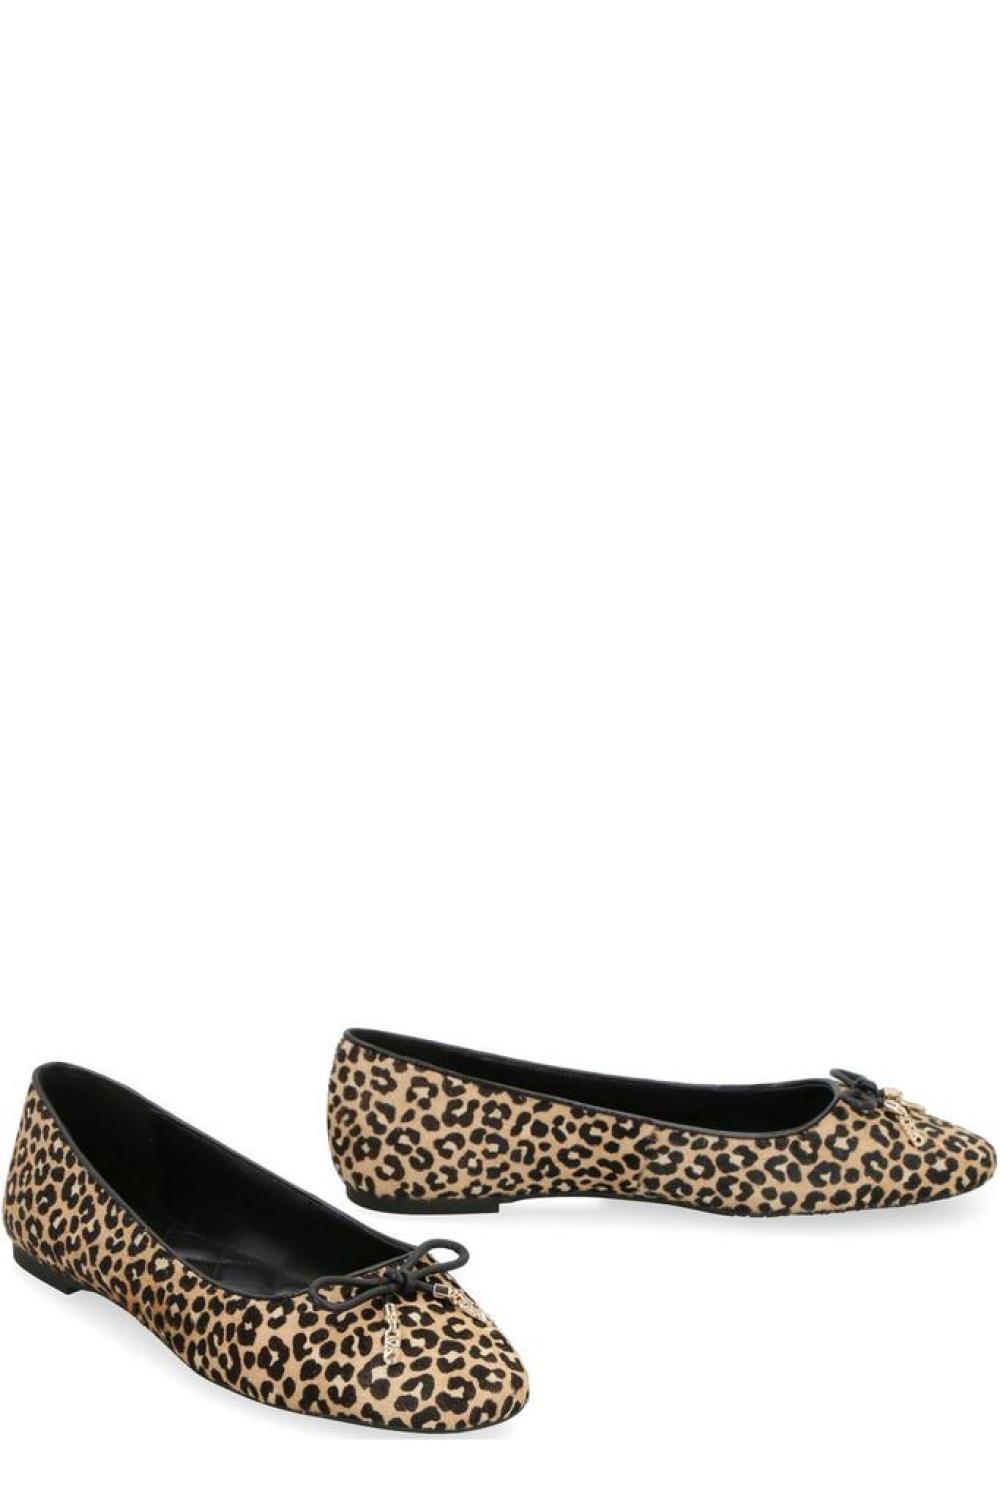 Michael Michael Kors Nori Leopard Printed Ballet Flat Shoes